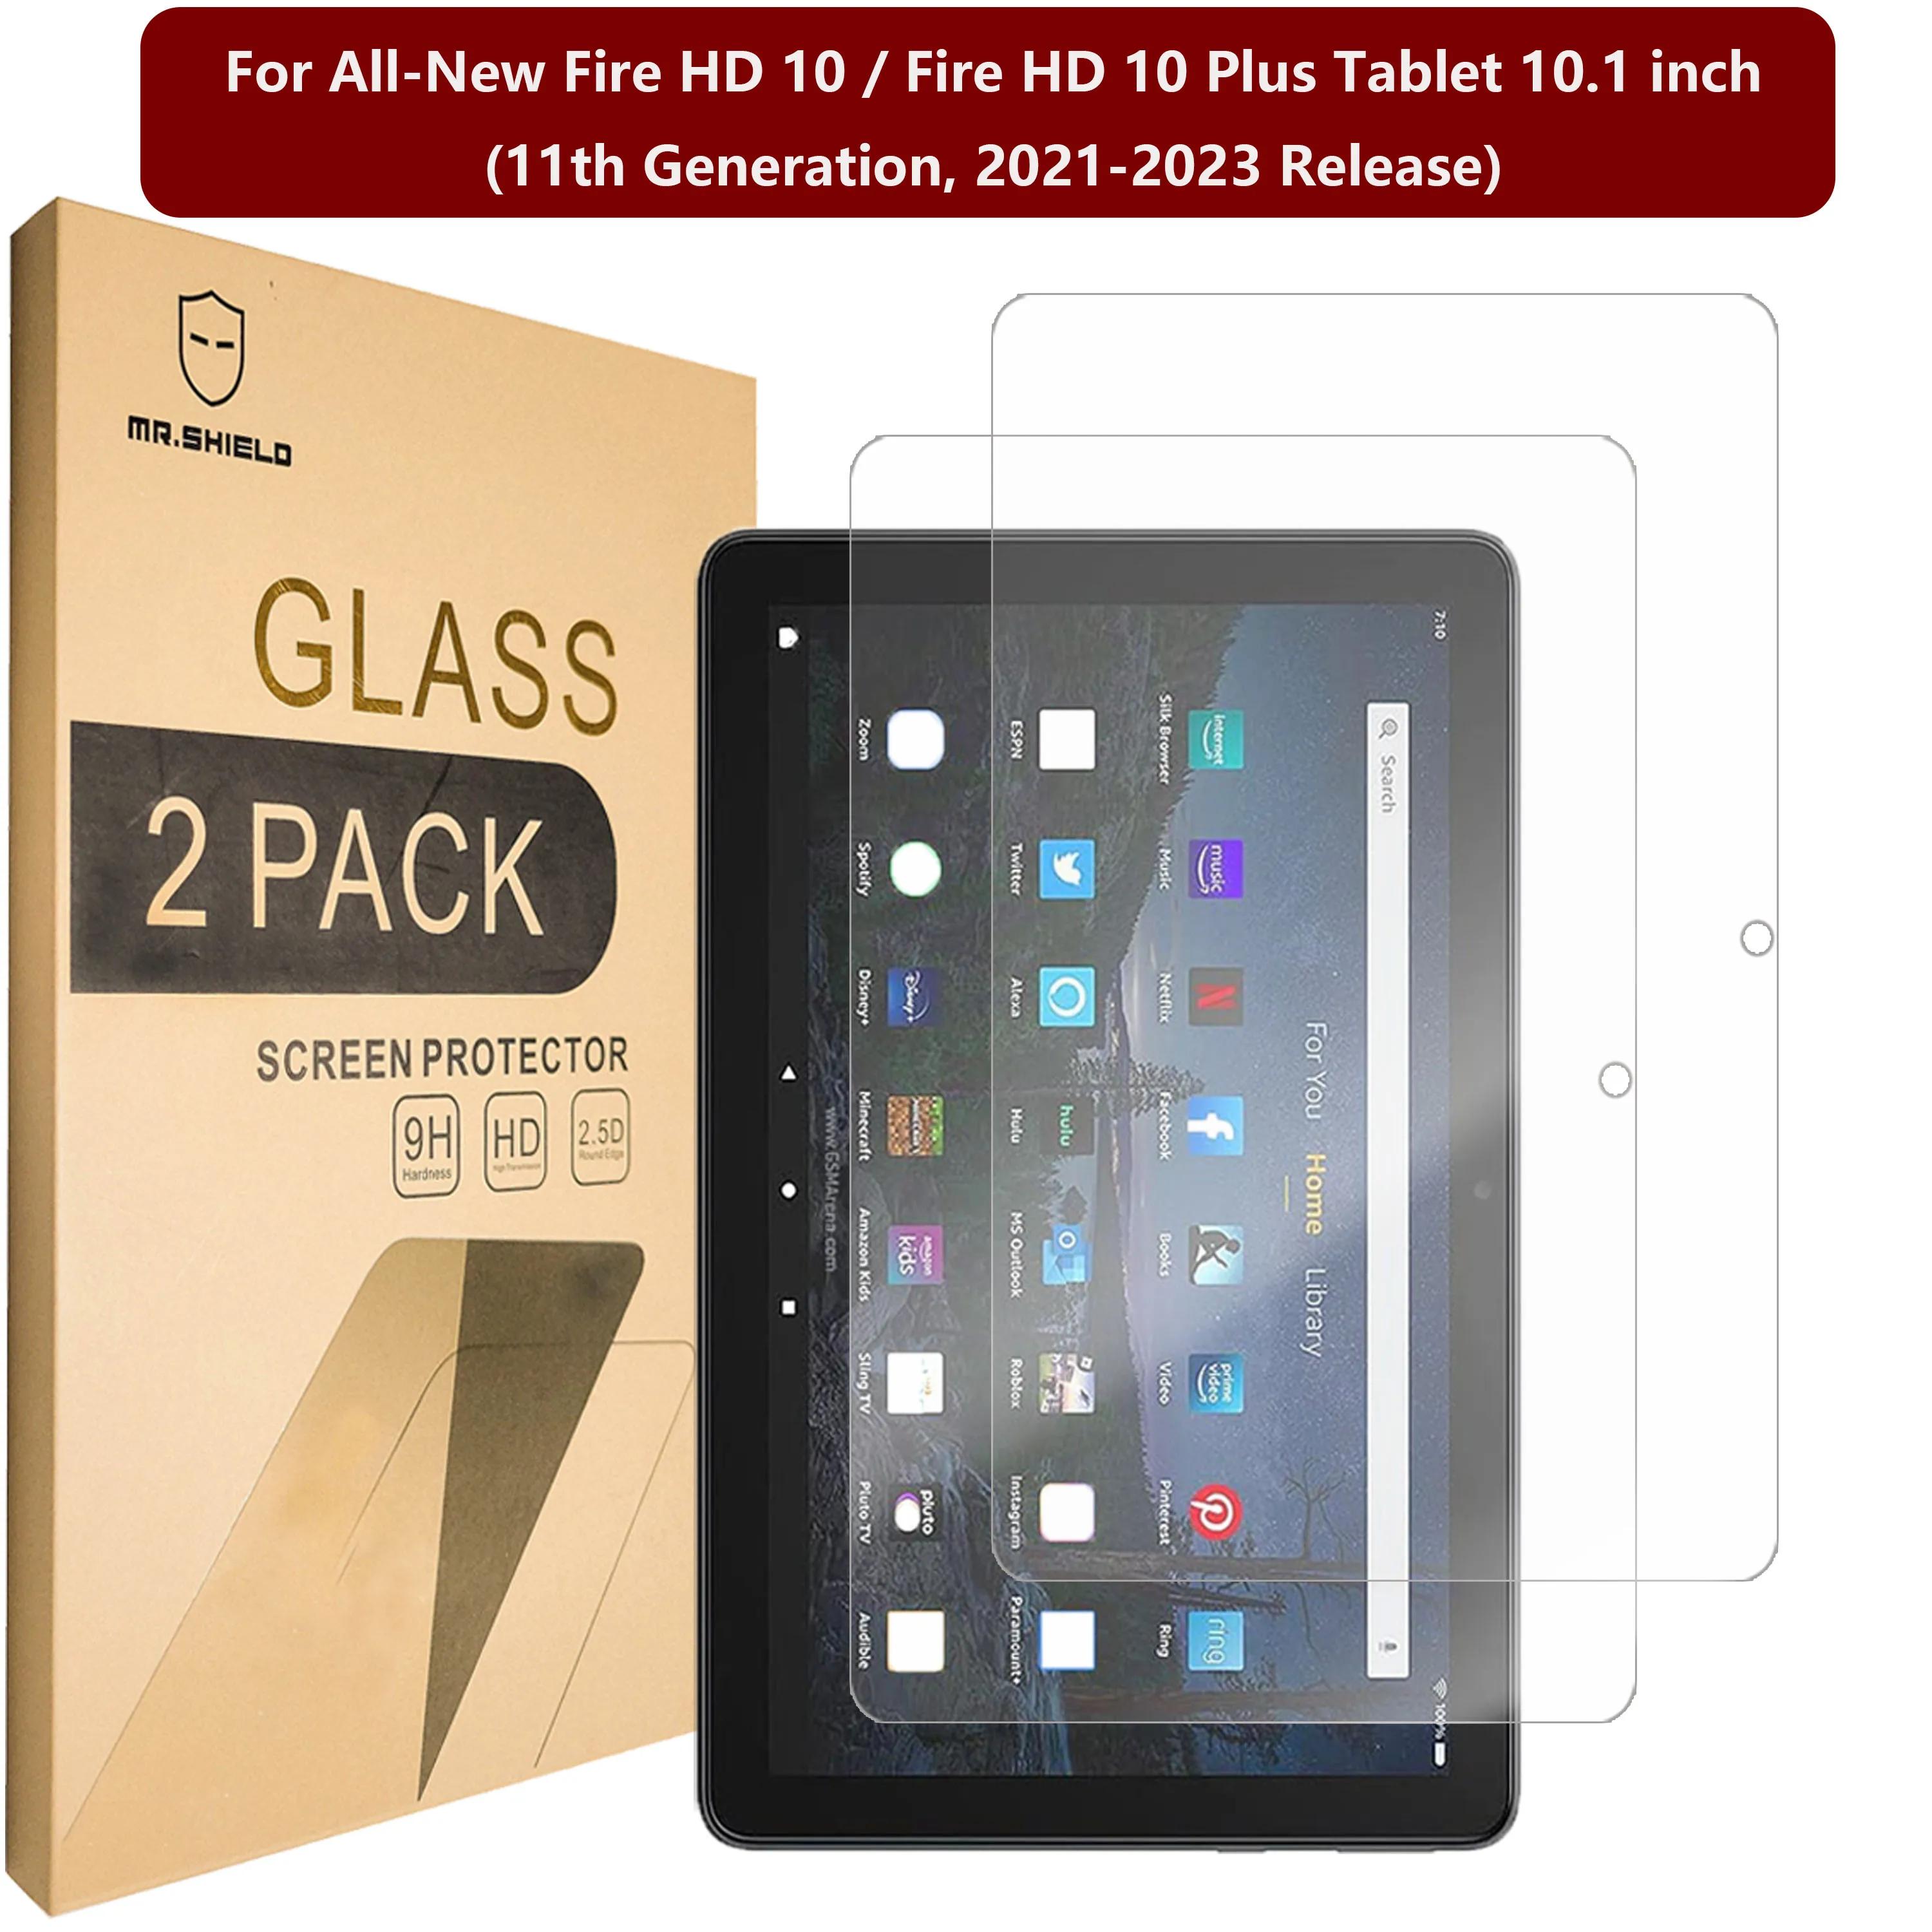 Mr.Shield-All-New Fire HD 10 / Fire HD 10 Plus Tablet 10.1 inch (11th Generation, 2021-2023 Release), 2 